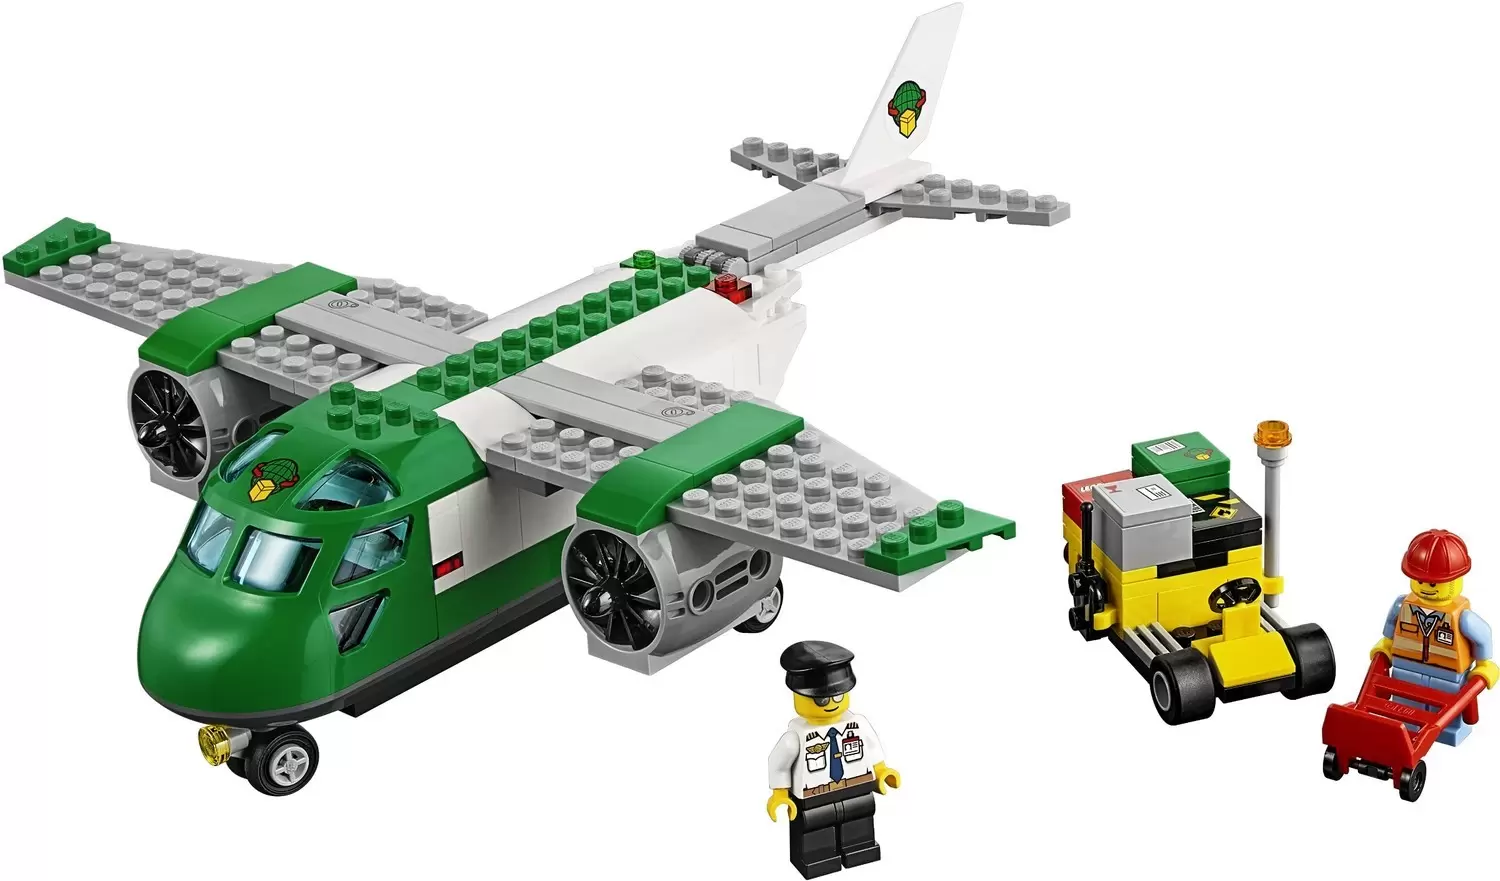 LEGO CITY - Airport Cargo Plane